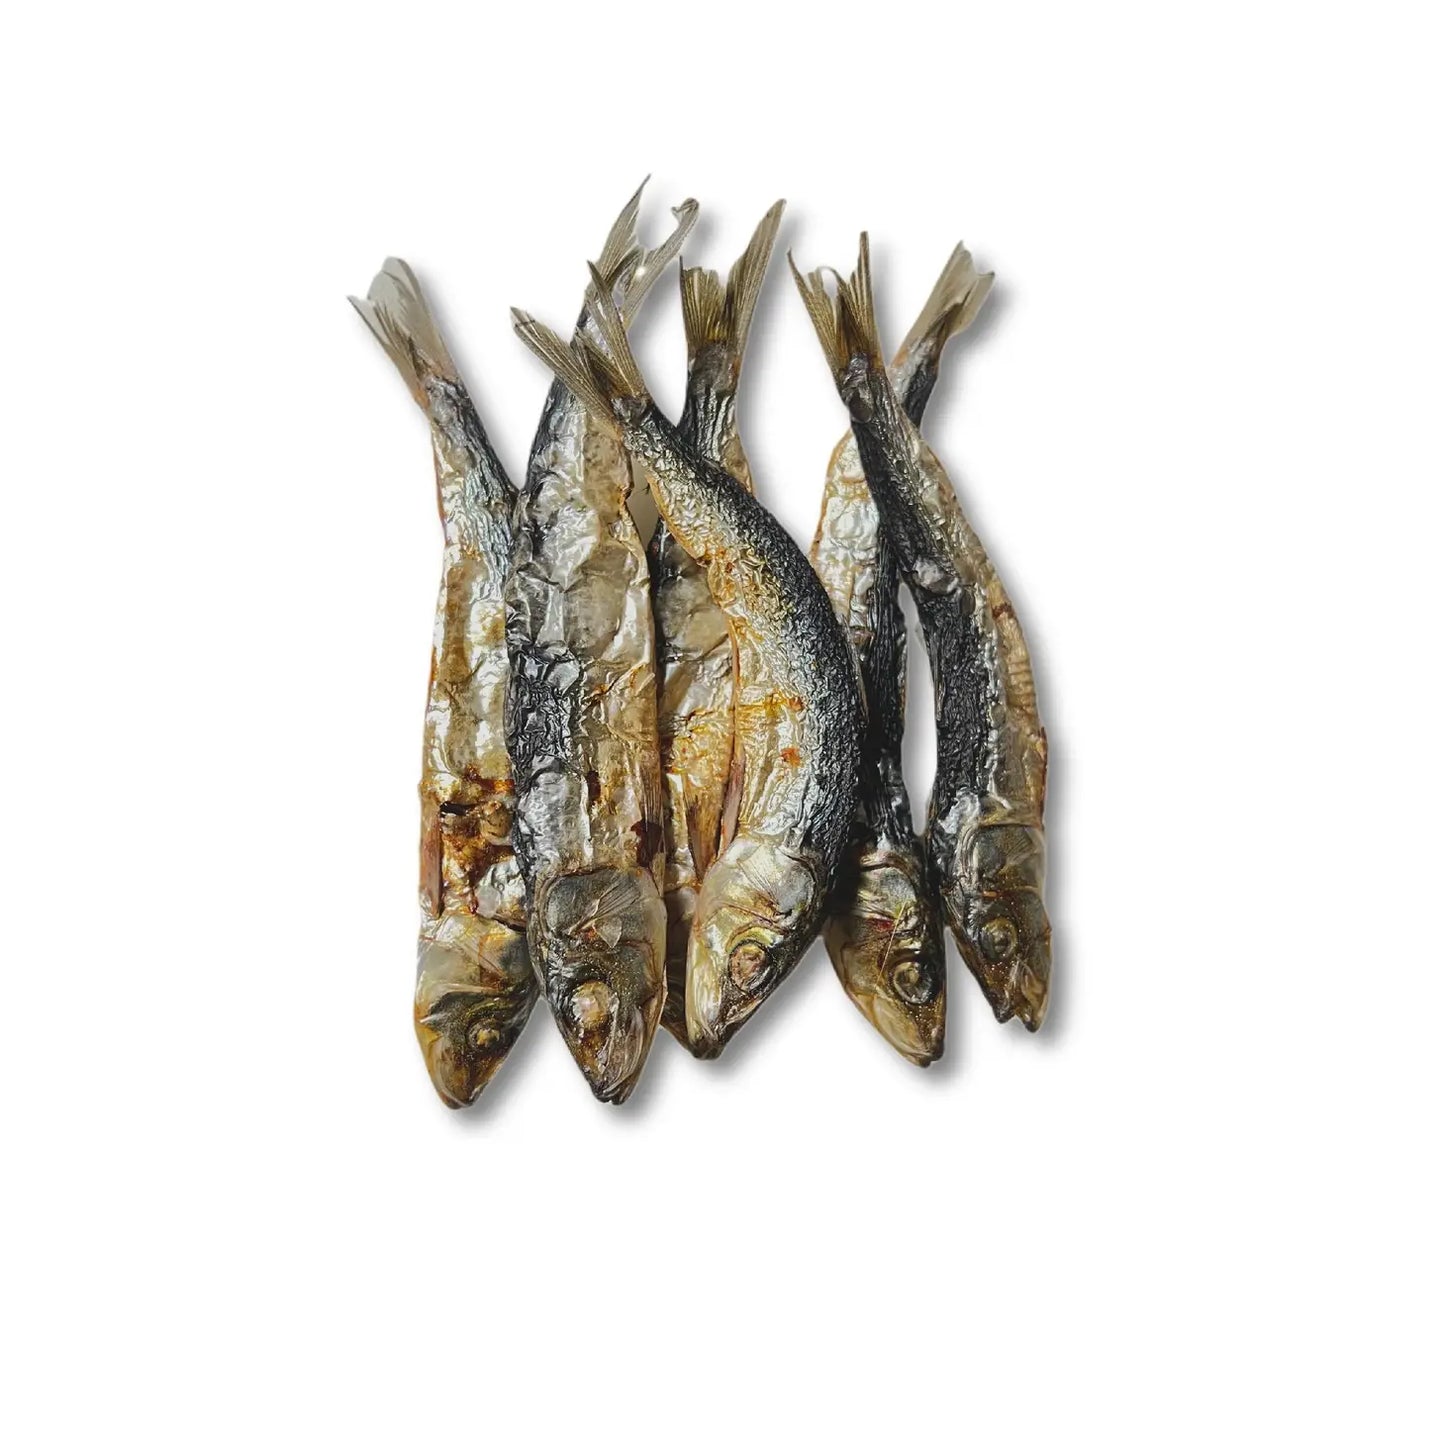 Dashi's Raw Pet Supply Dehydrated Whole Sardines